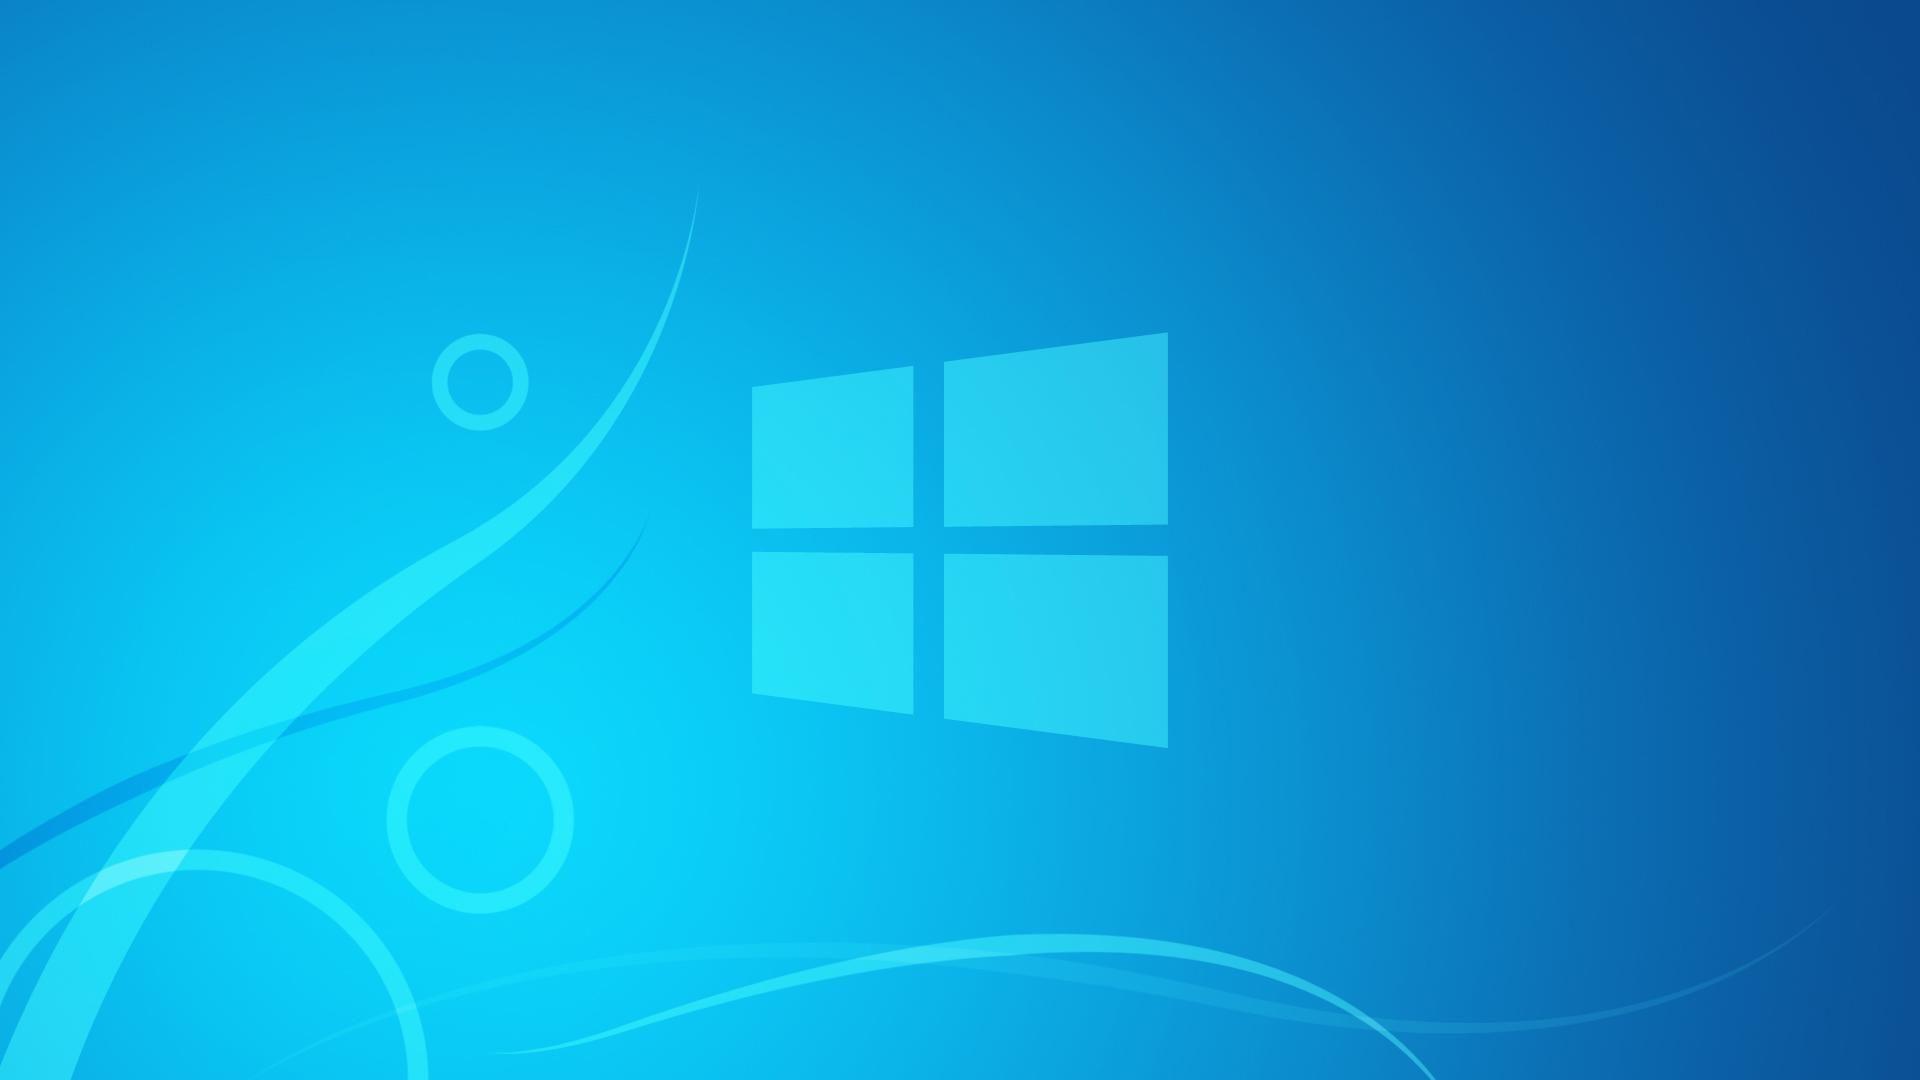 Windows 8.1 Wallpaper for Free Download, 47 Windows 8.1 Full HD